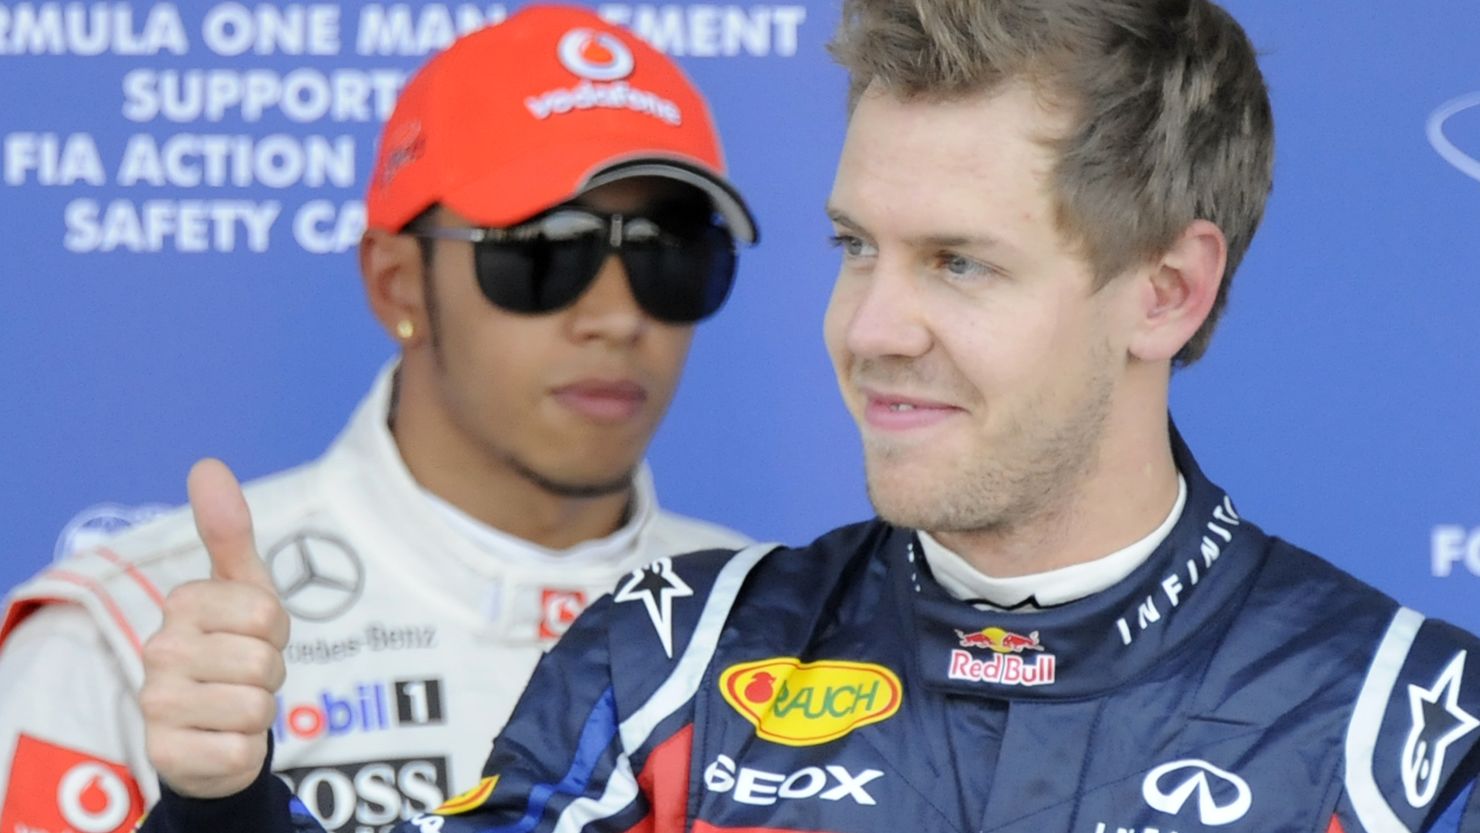 Red Bull driver Sebastian Vettel gestures to celebrate his pole position at Suzuka, as Lewis Hamilton looks on.